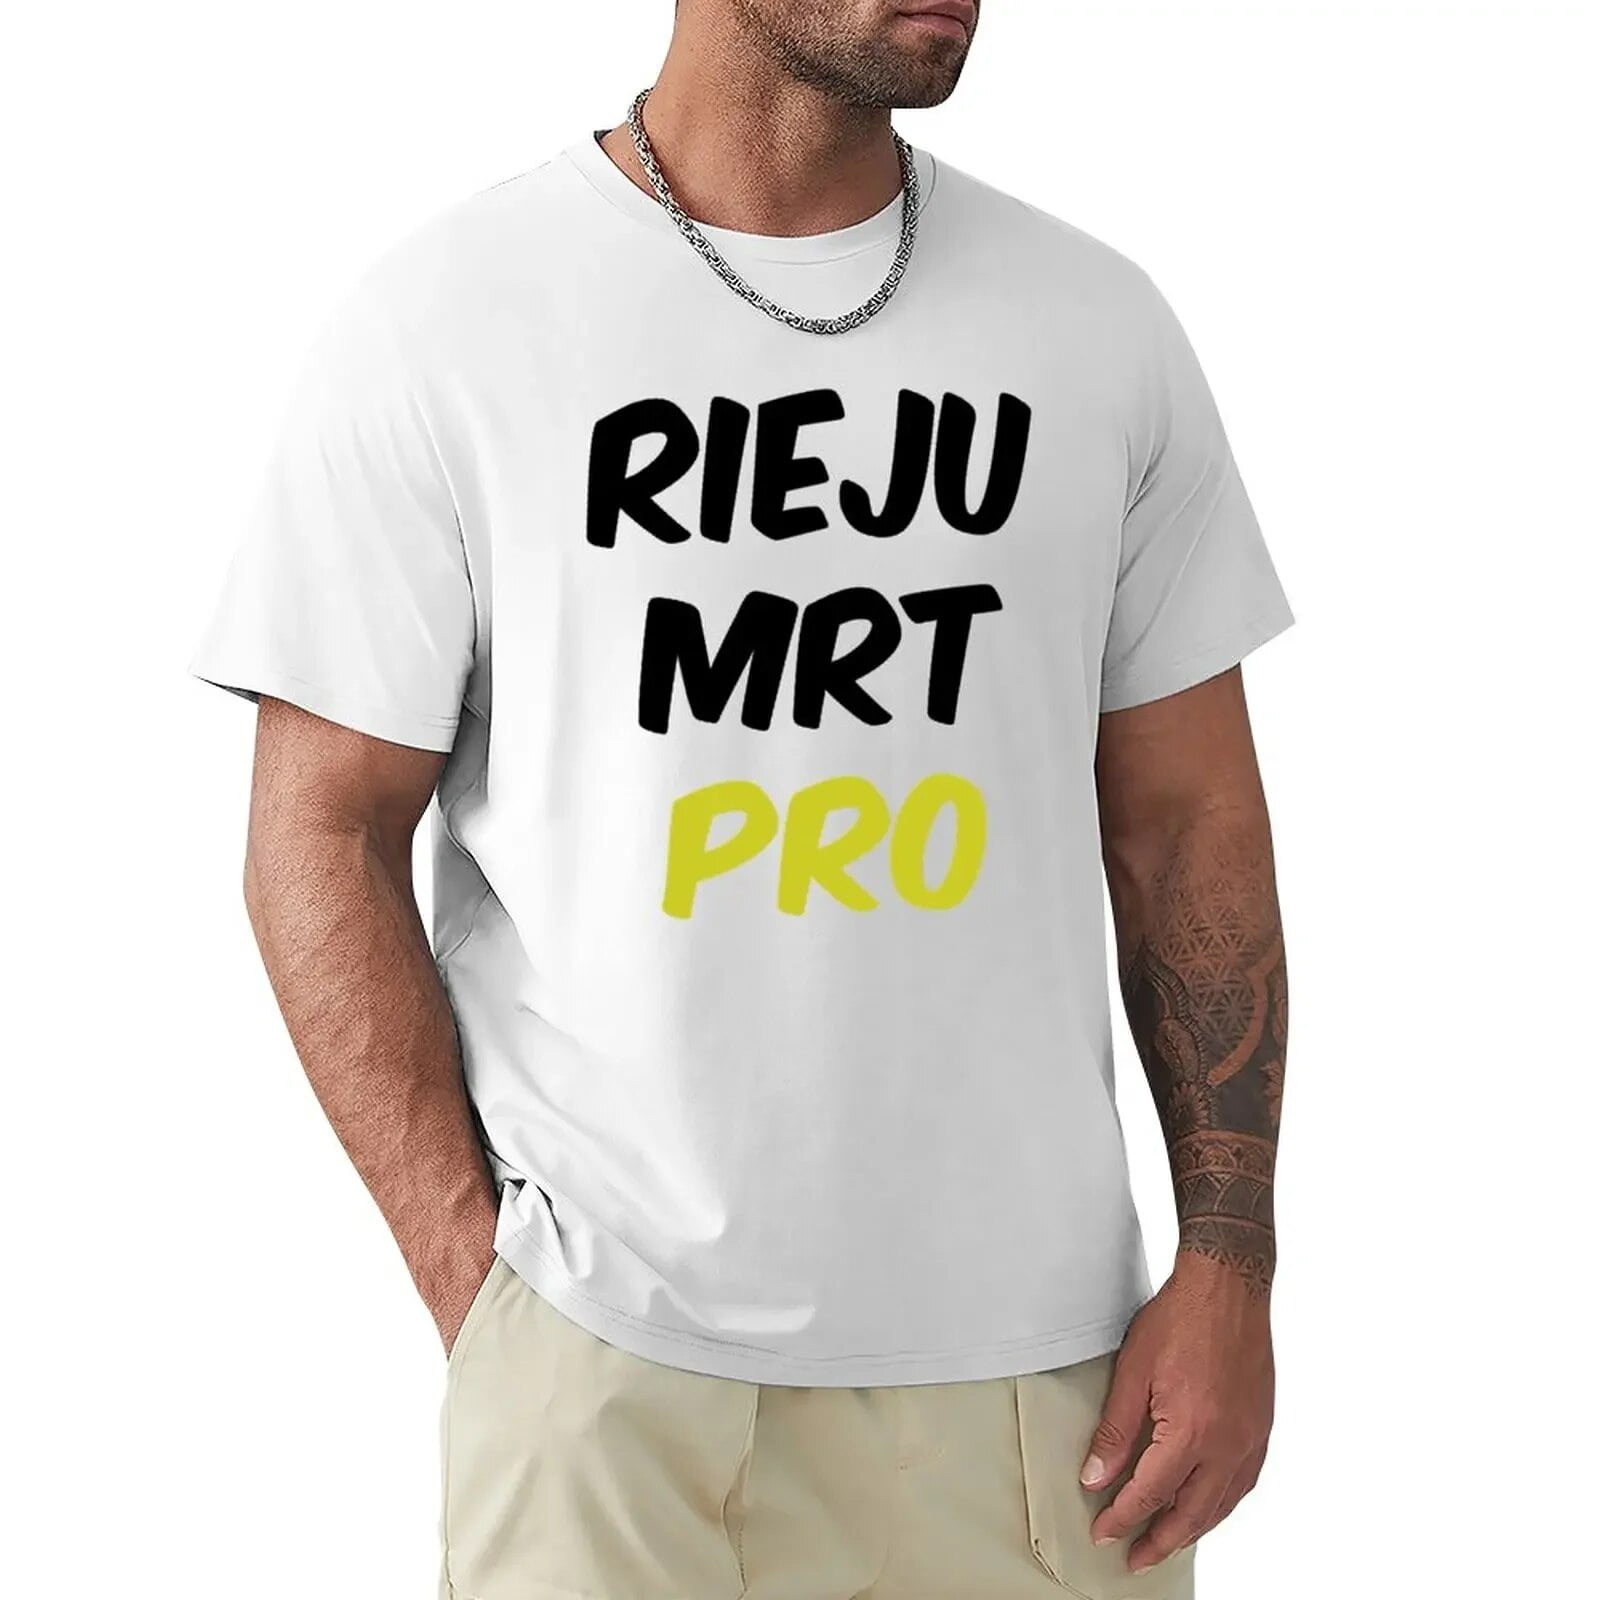 Rieju Mrt Pro T-Shirt Hippie Clothes Animal Prinfor Boys Plus Sizes ...